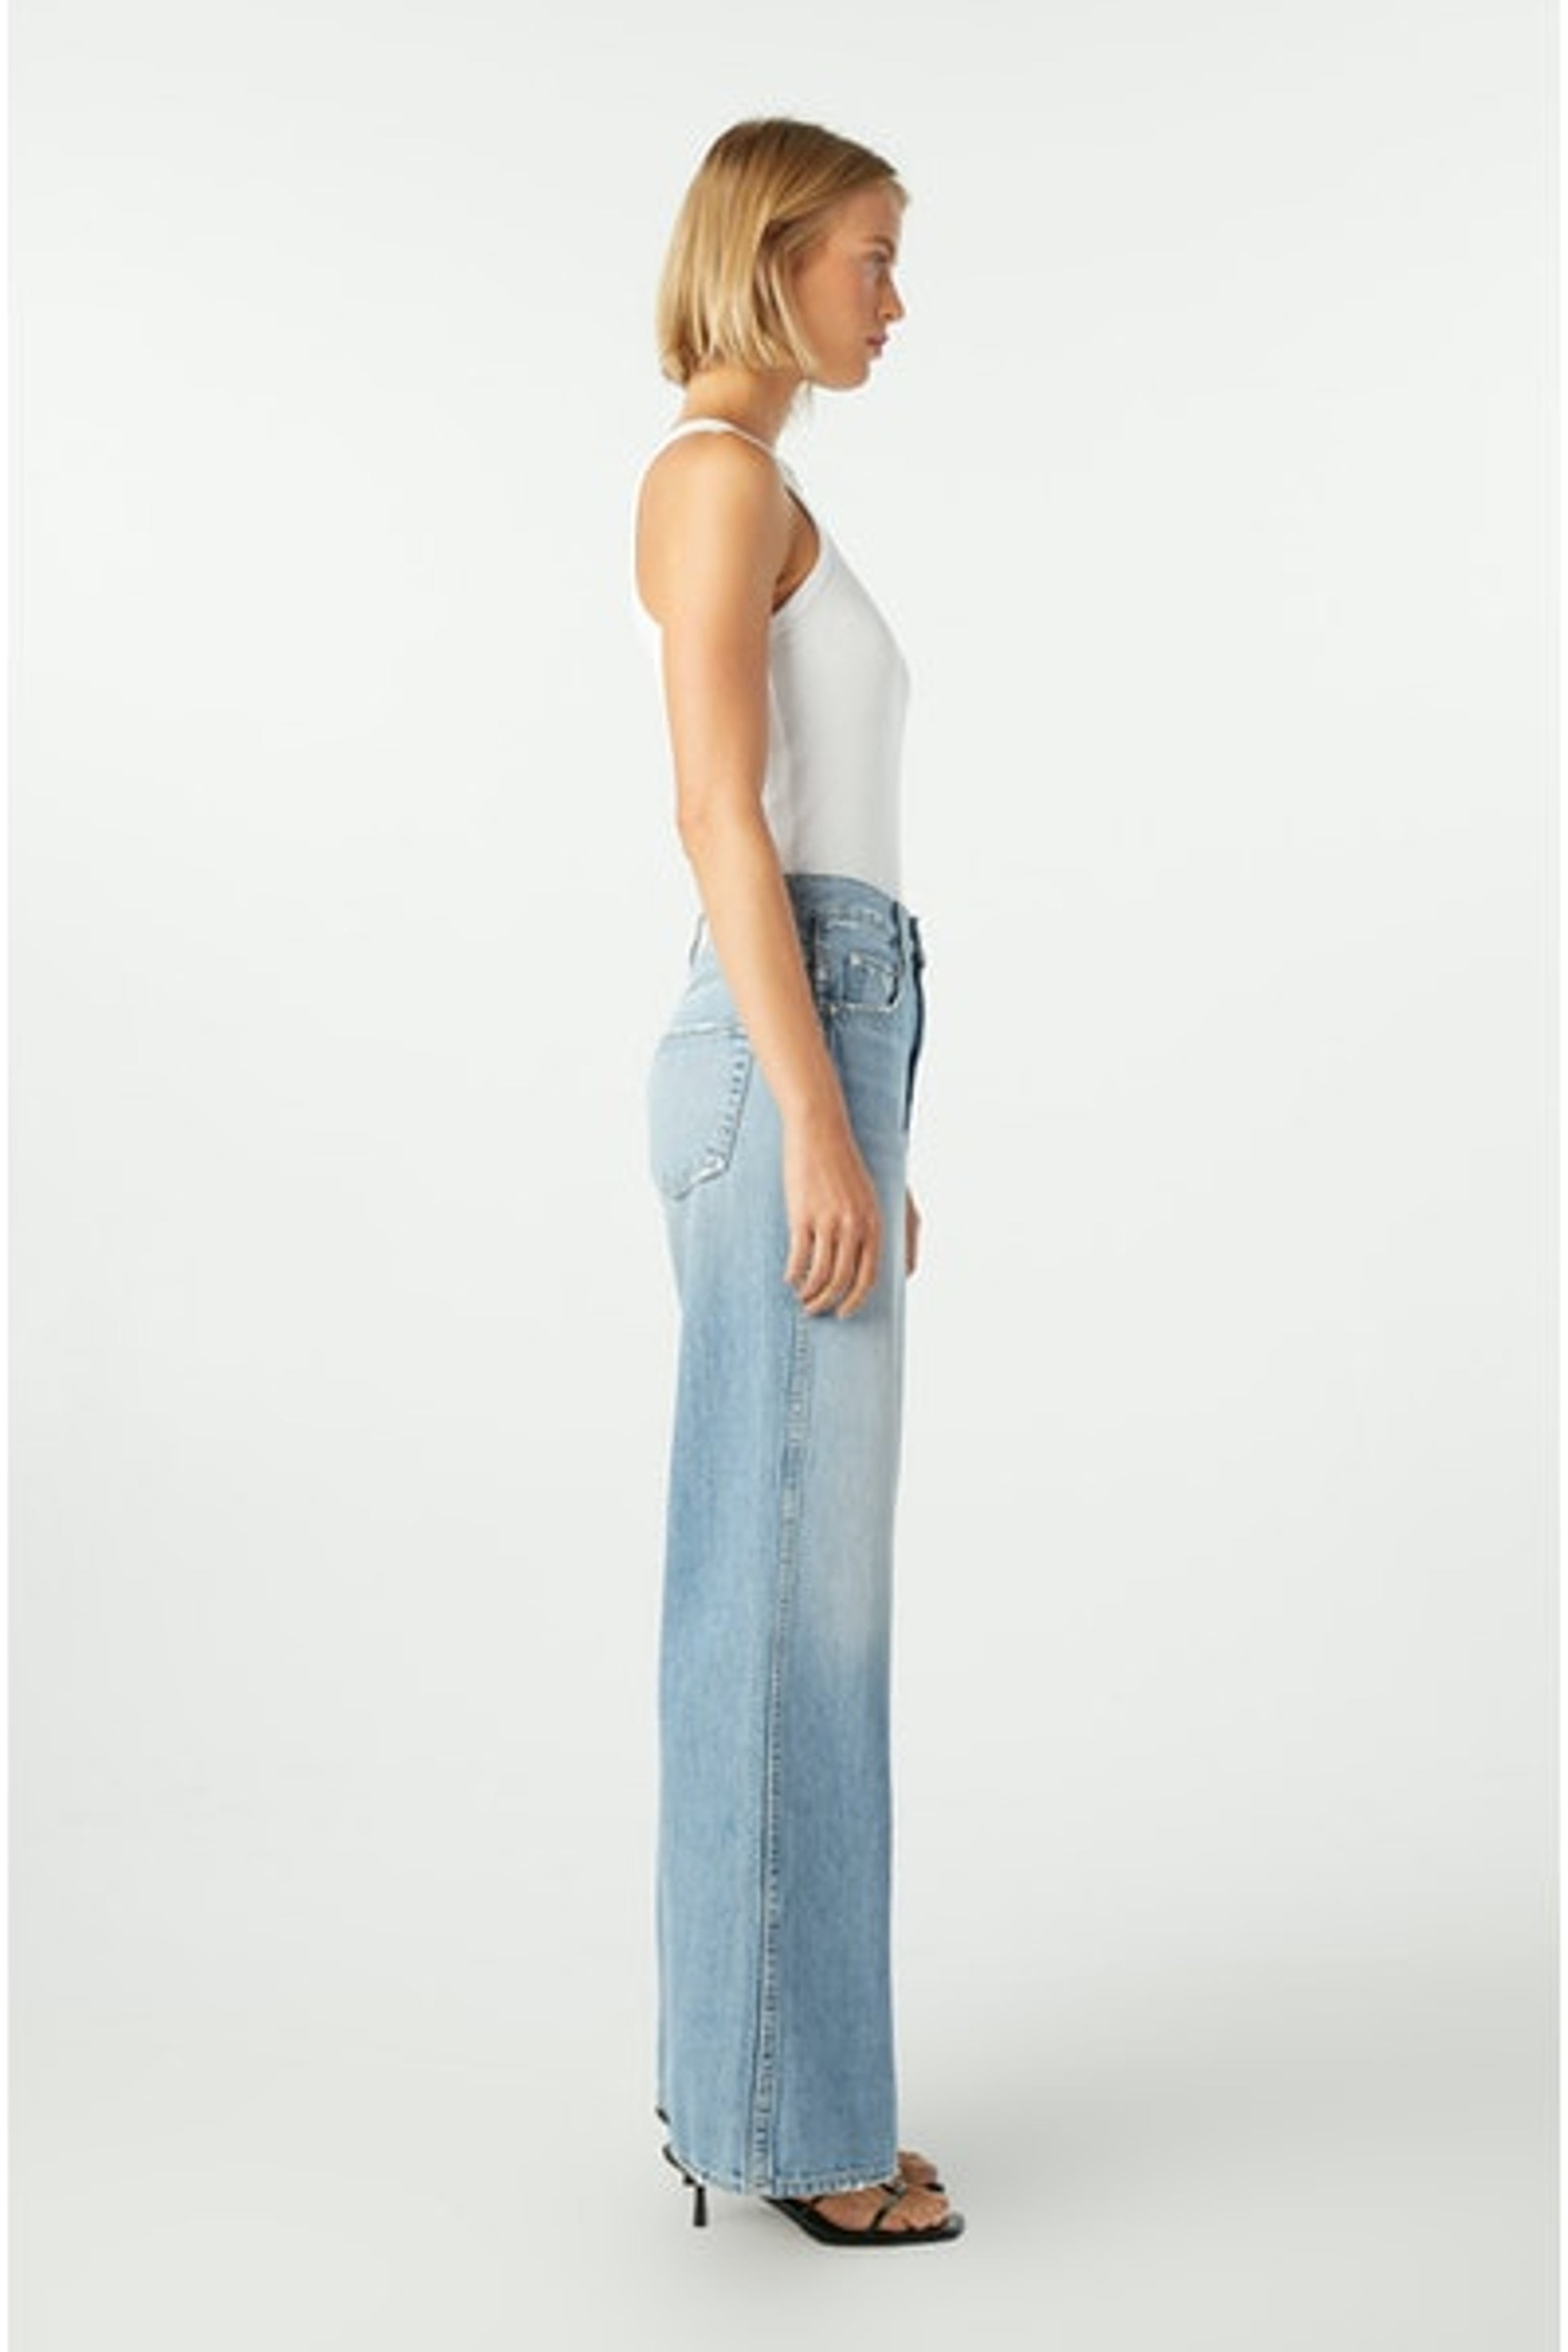 AMO DENIM Vintage Inspired Light Wash Wide Leg High Rise Frida Jean in OUTLAW Wash - Made in LA using 100% Cotton Denim